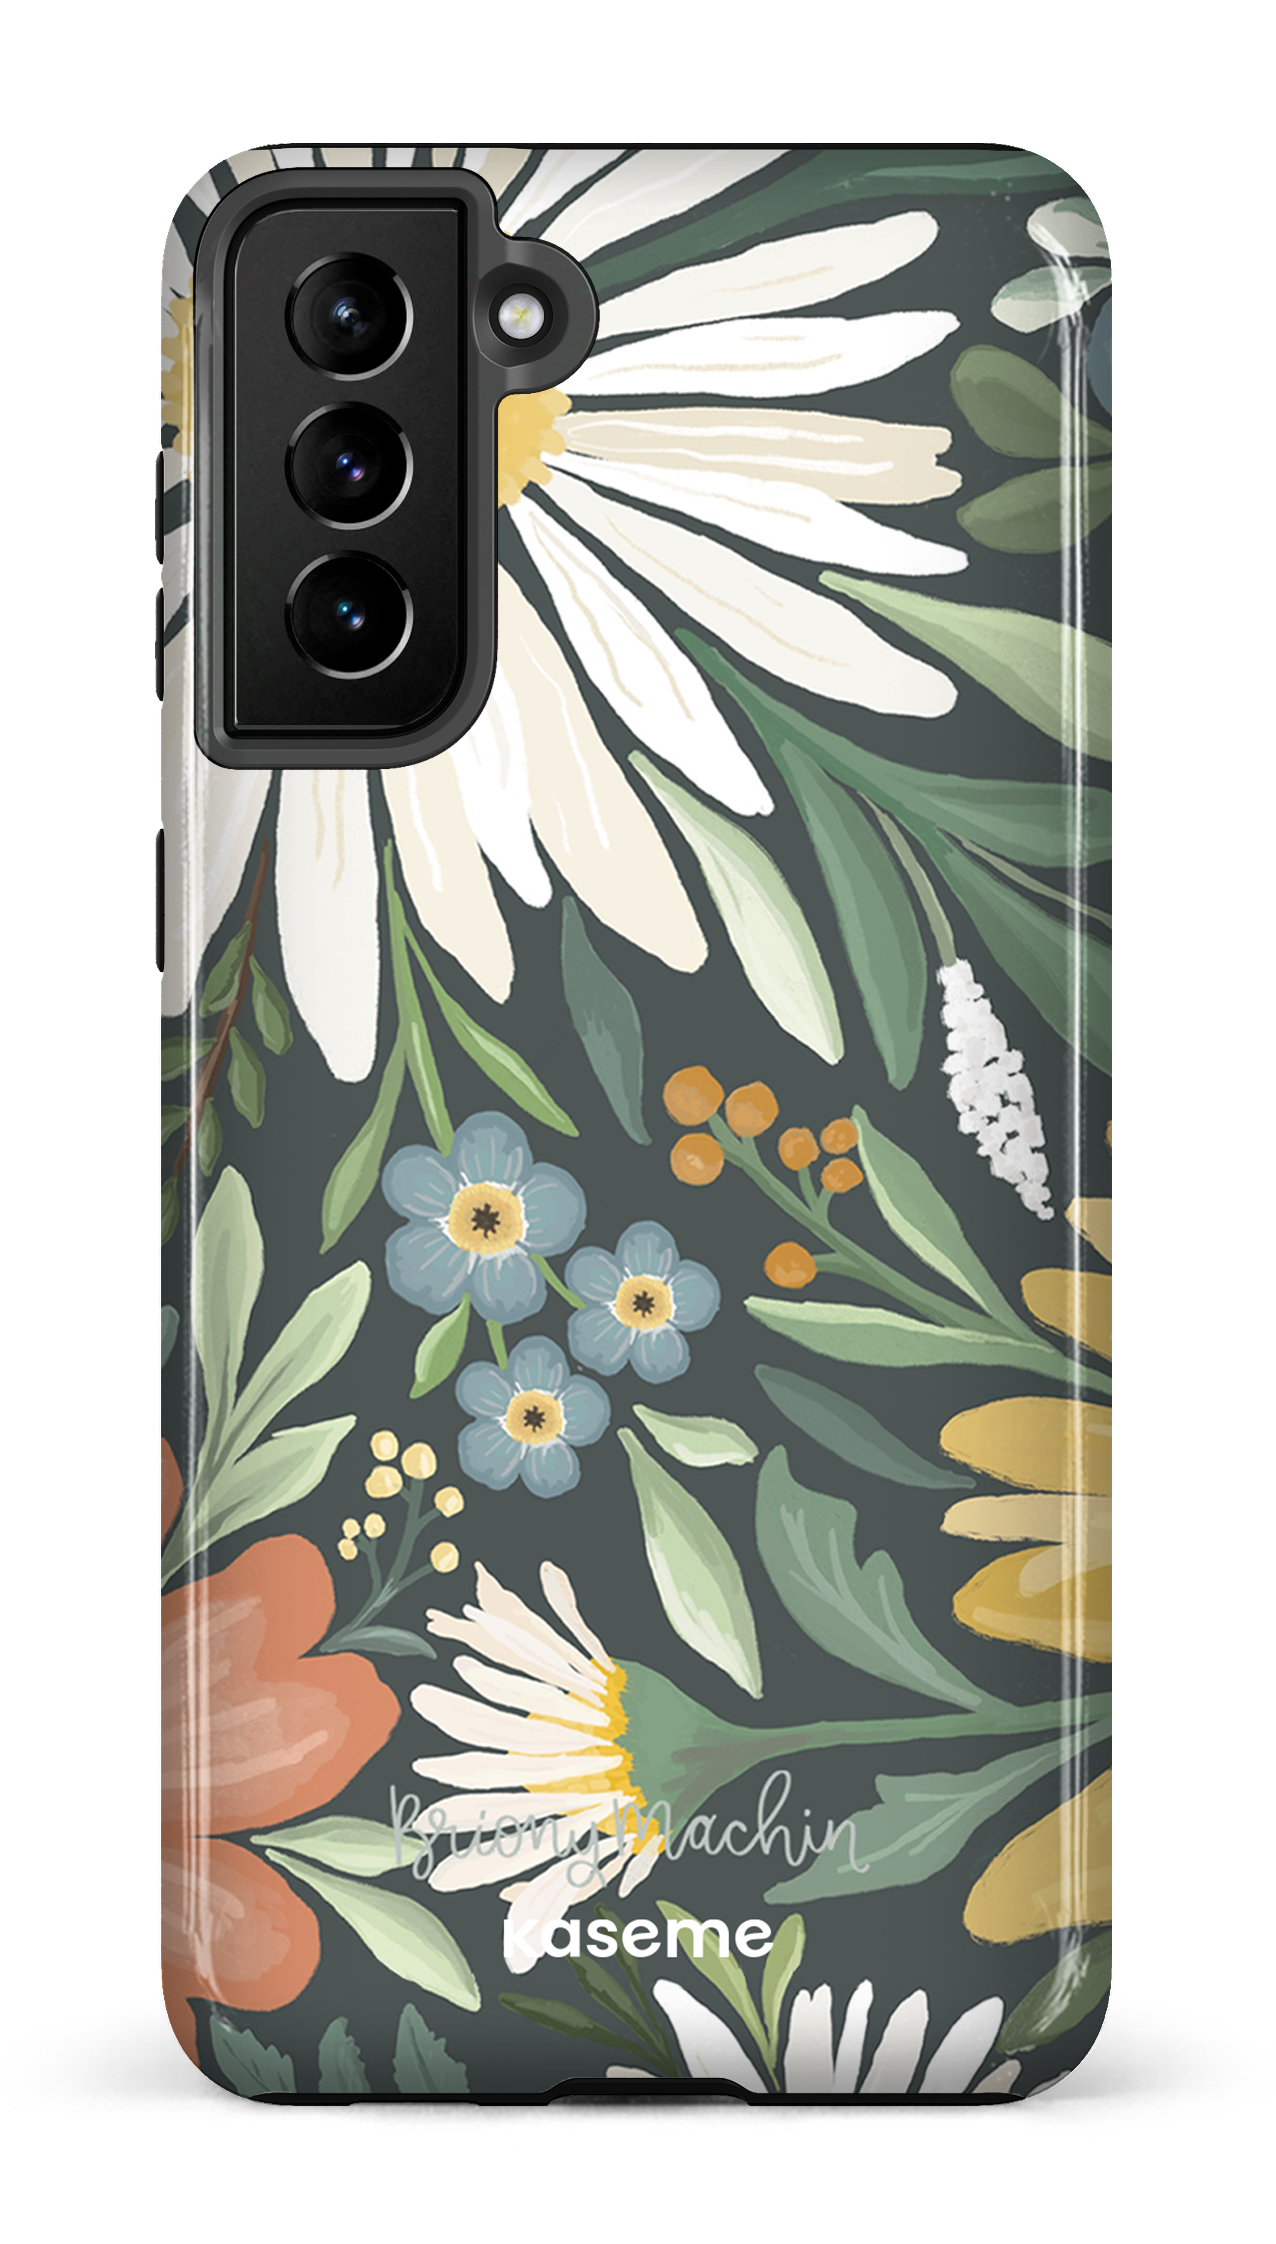 Garden Blooms Green by Briony Machin - Galaxy S21 Plus